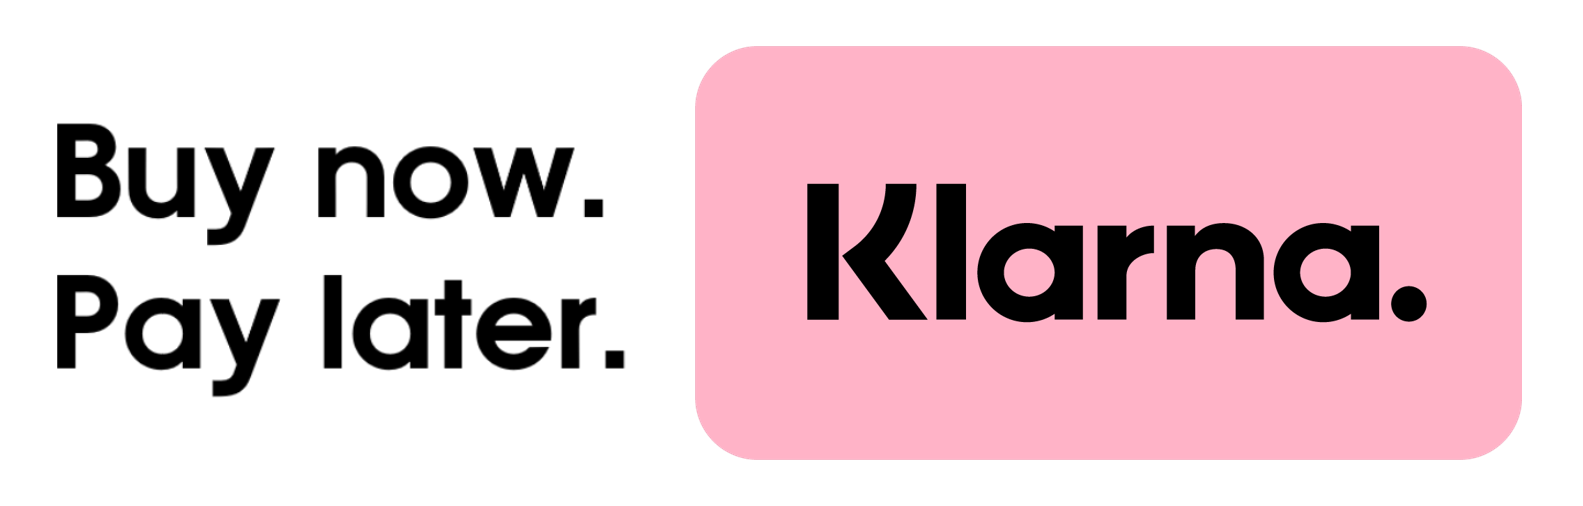 Klarna-logo-option-1.png